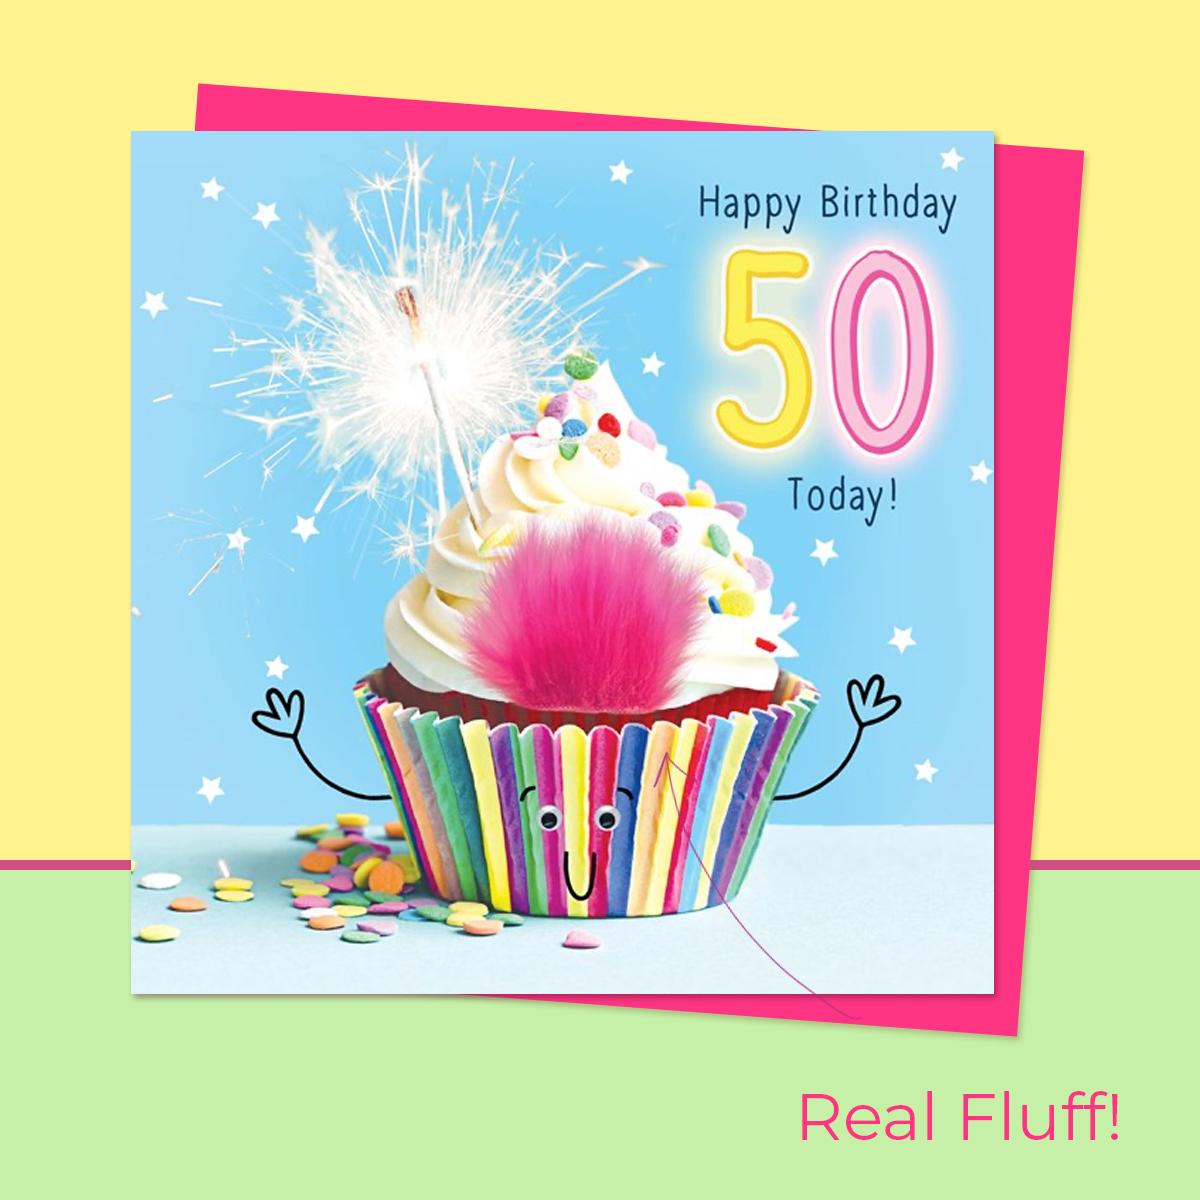 Fluff 50 Birthday Cupcake Front Image